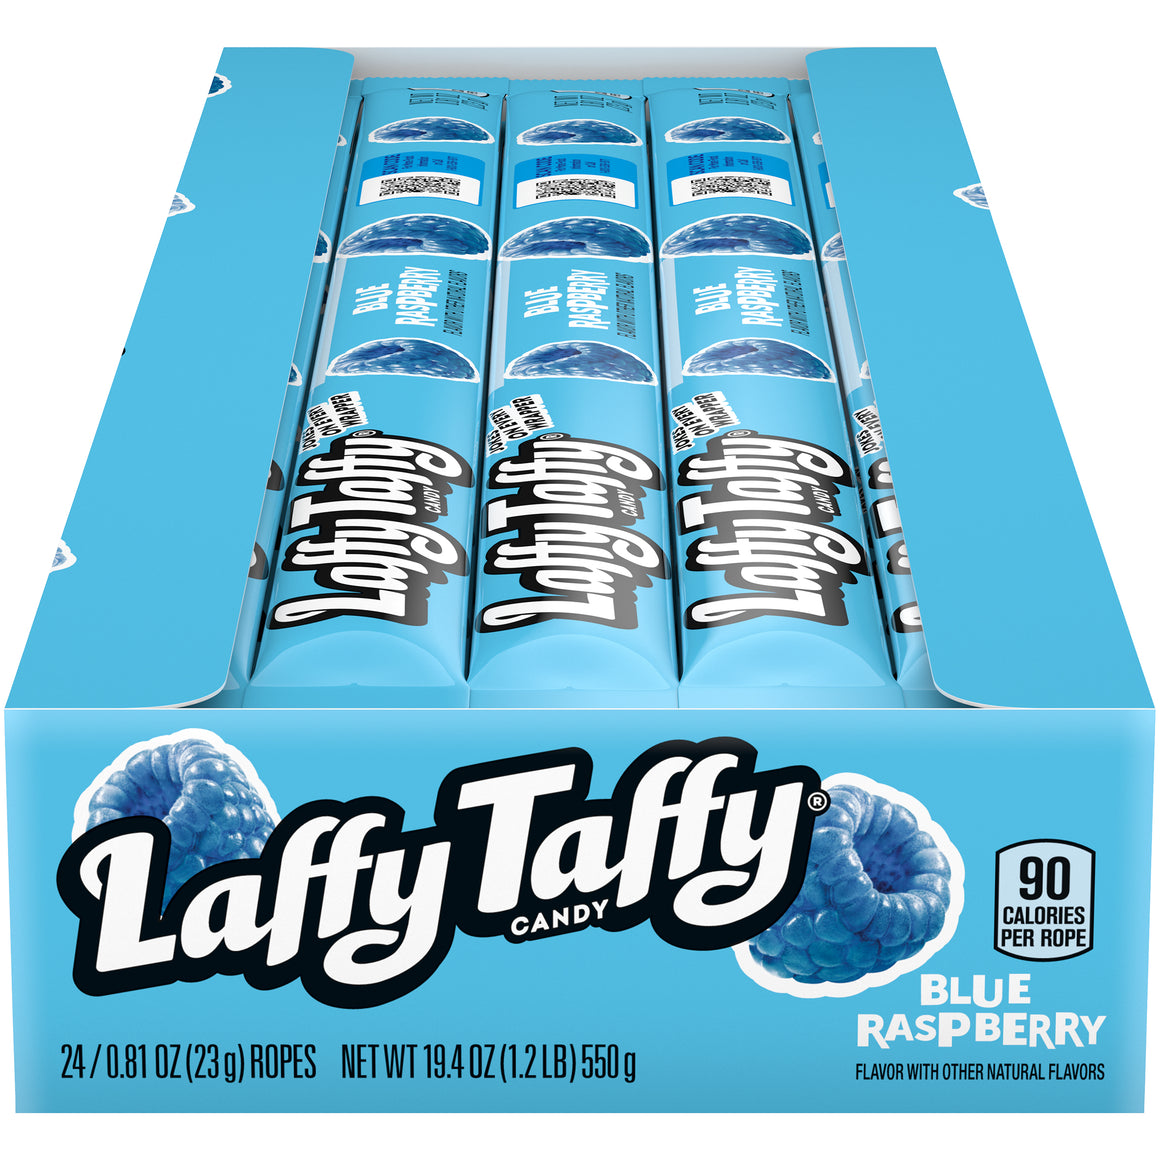 All City Candy Laffy Taffy Blue Raspberry Rope .81-oz. 1 Piece Taffy Ferrara Candy Company For fresh candy and great service, visit www.allcitycandy.com